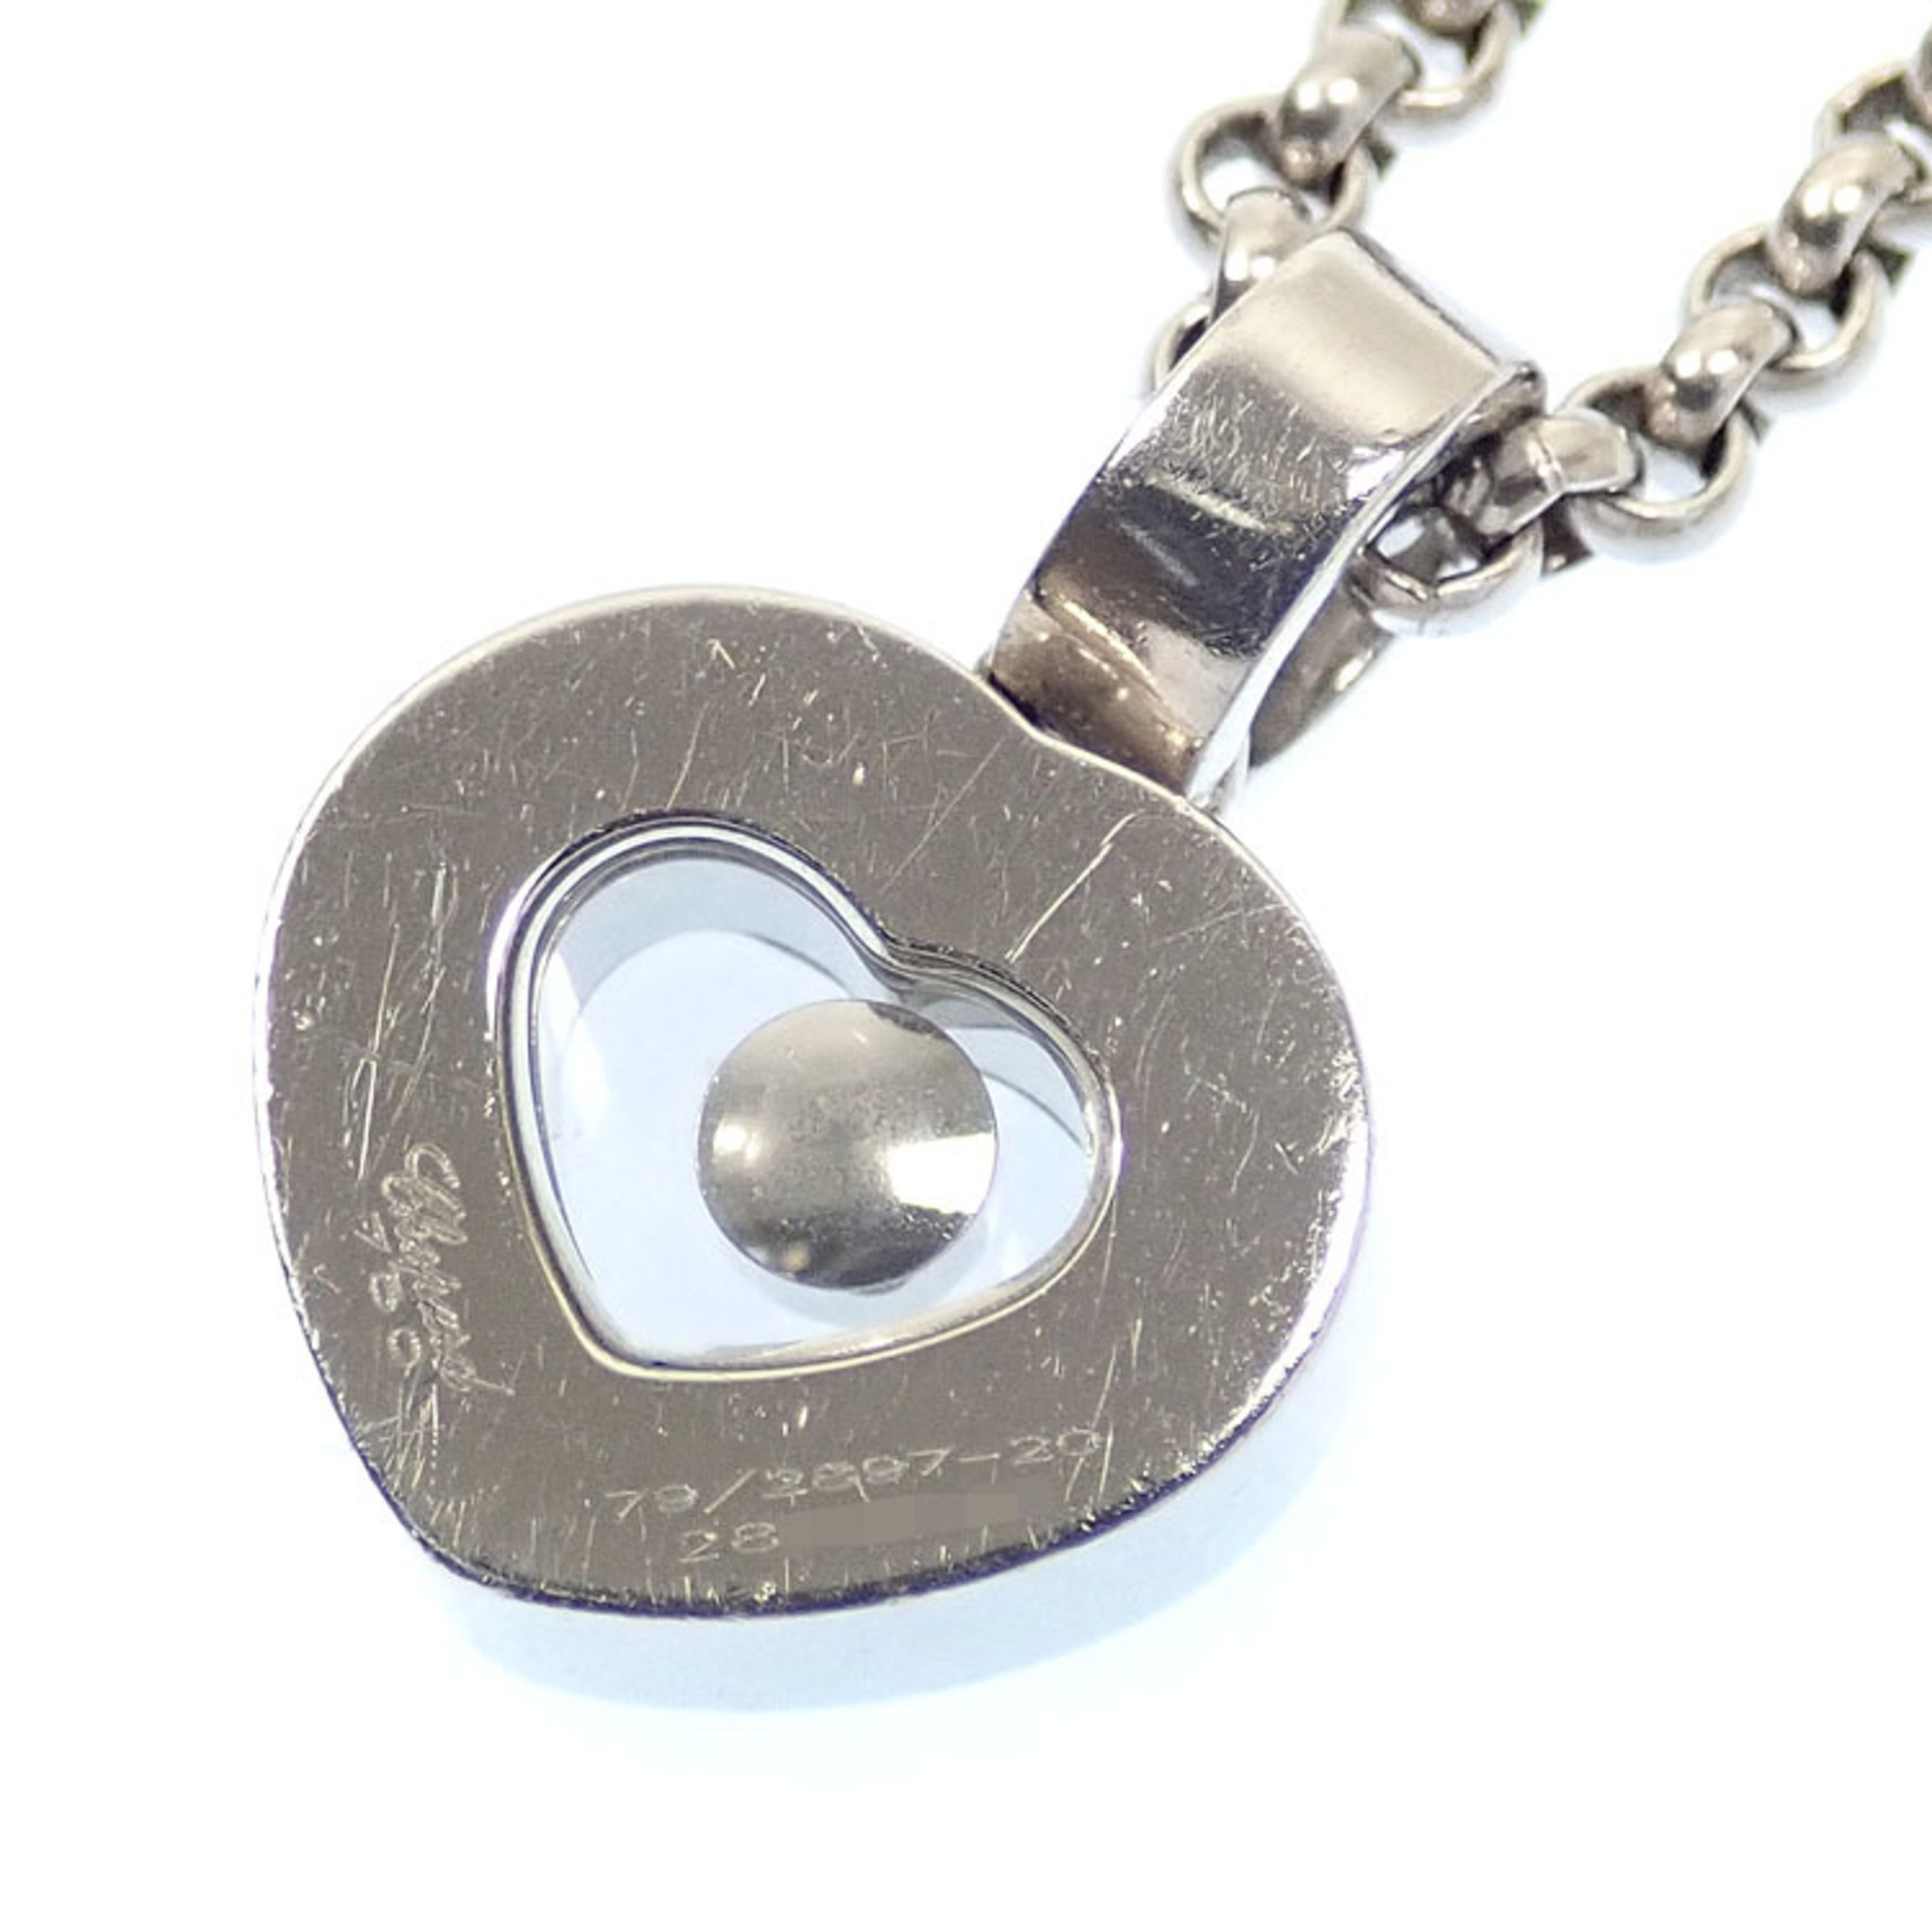 Chopard Happy Diamond Necklace for Women, K18WG, 12.5g, 18K White Gold, 750, Heart, A2231484